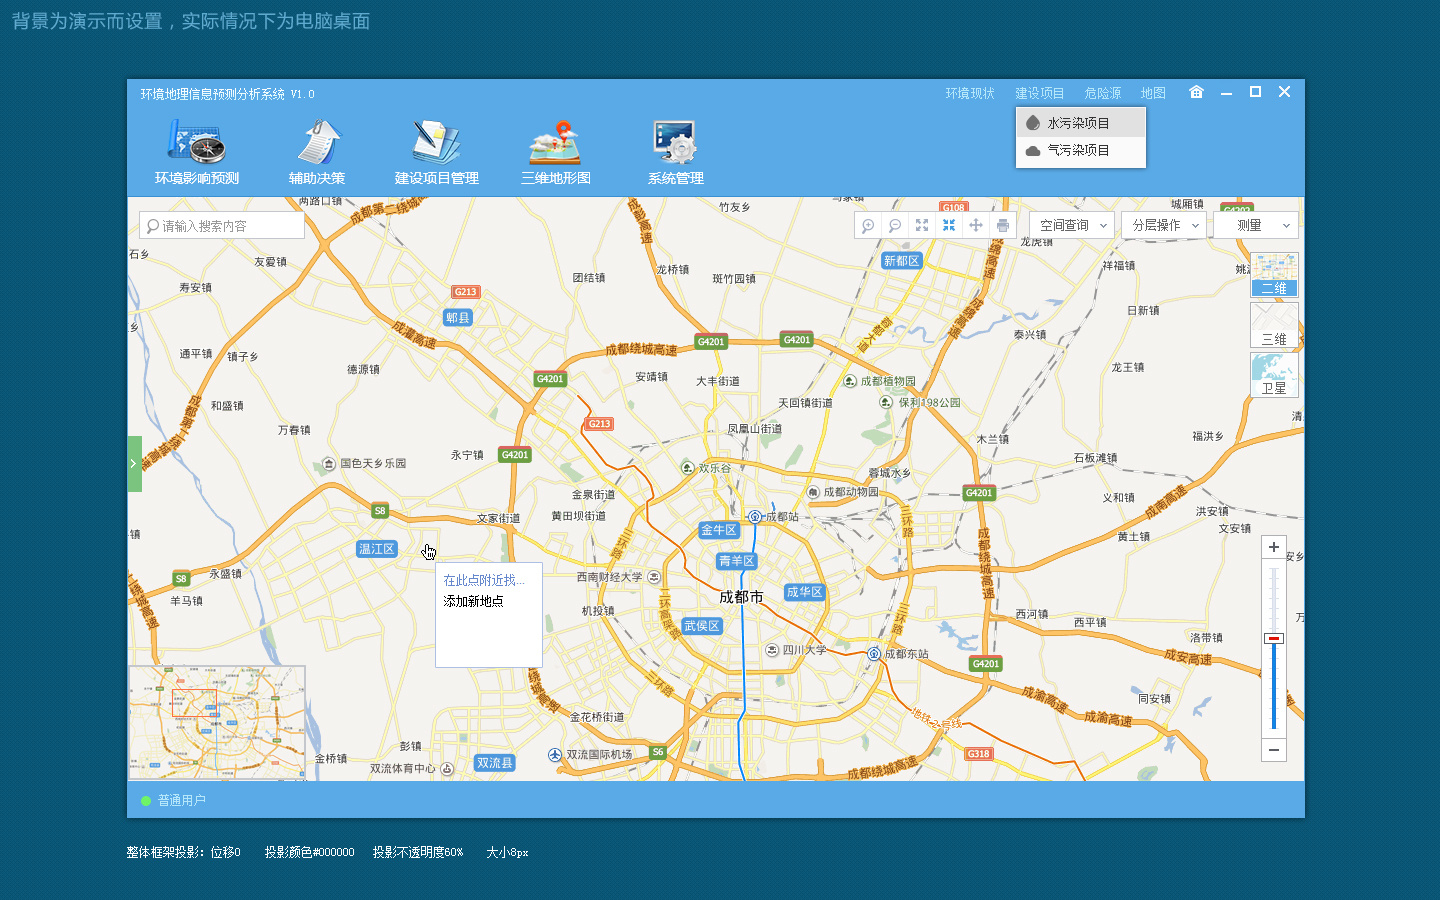 gis地理信息系统|UI|软件界面|lengjianfeng7 - 原